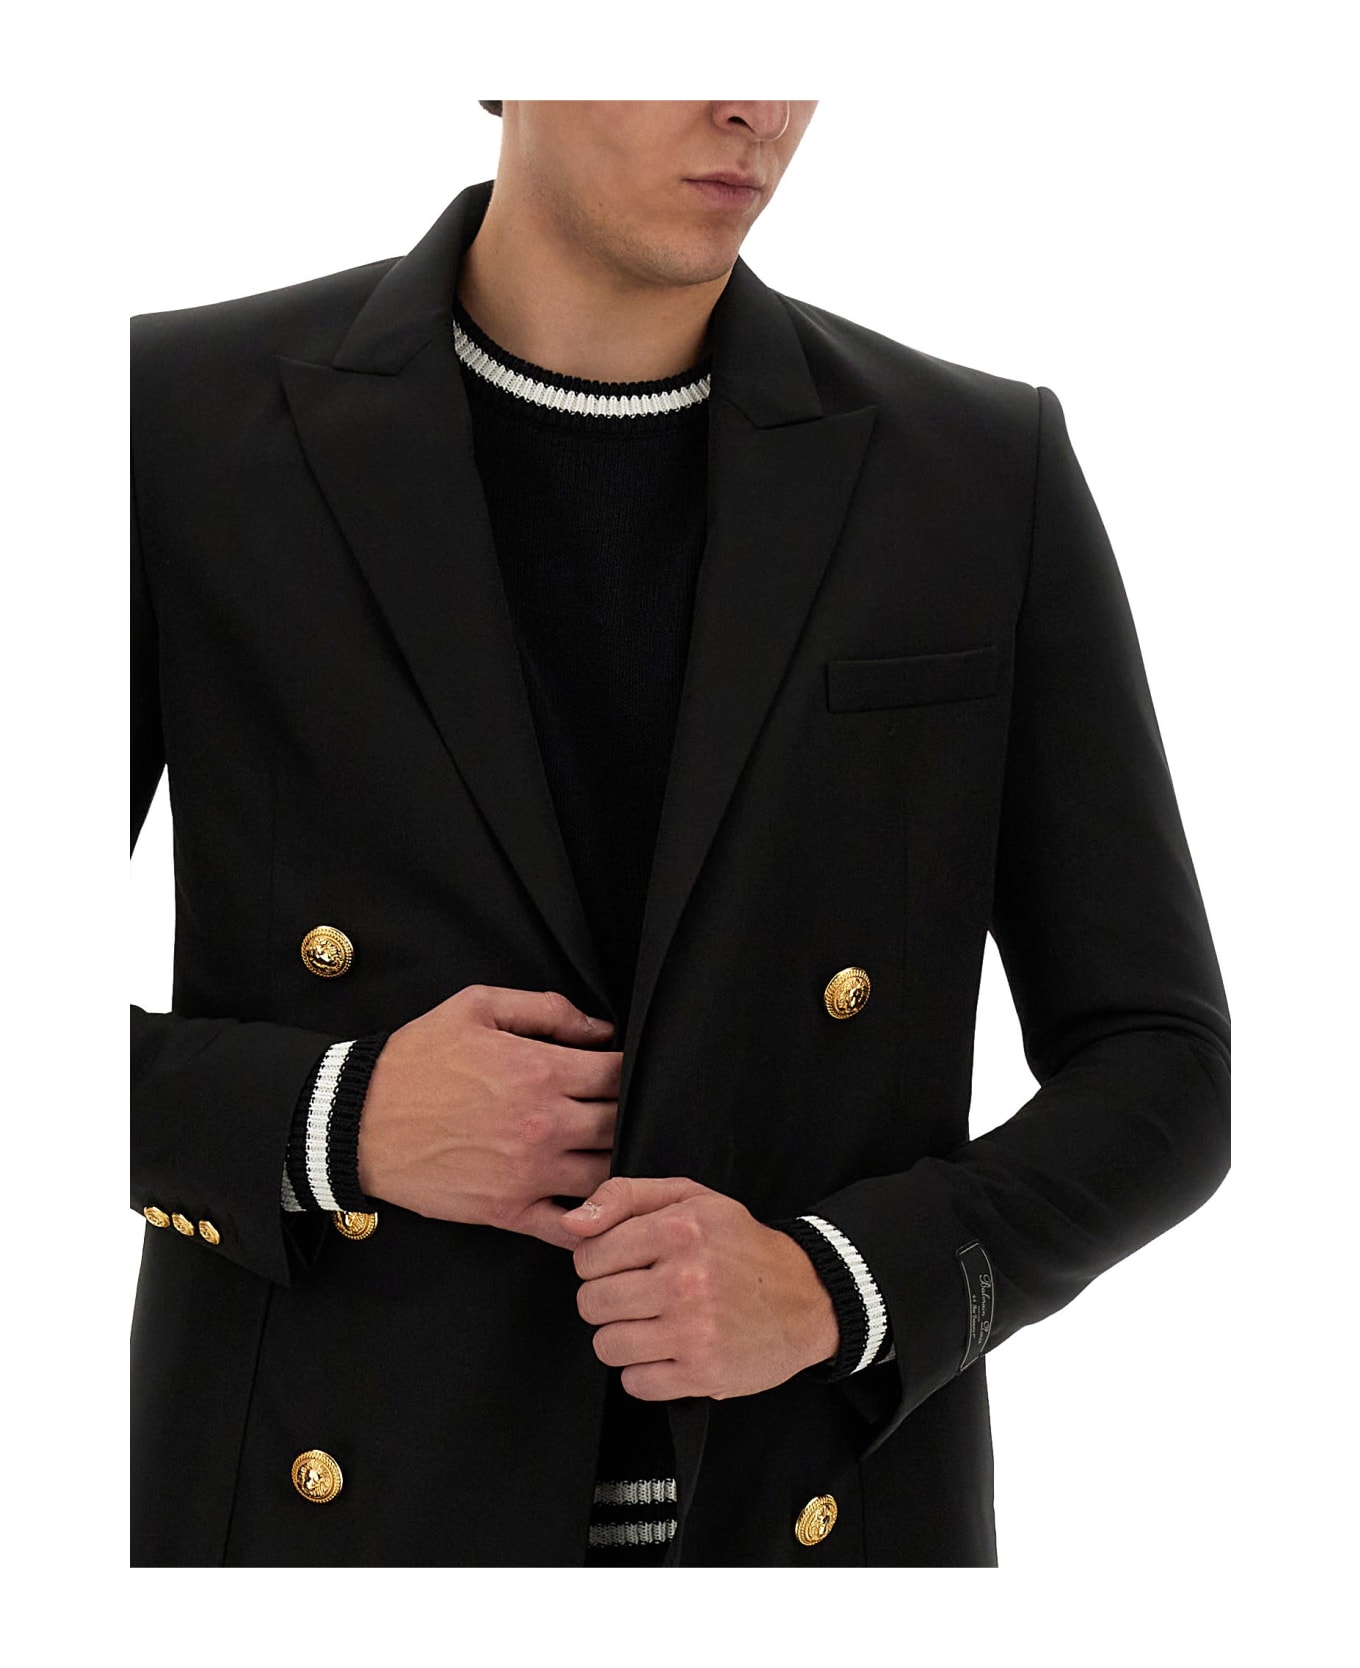 Balmain Technical Wool Jacket - NERO